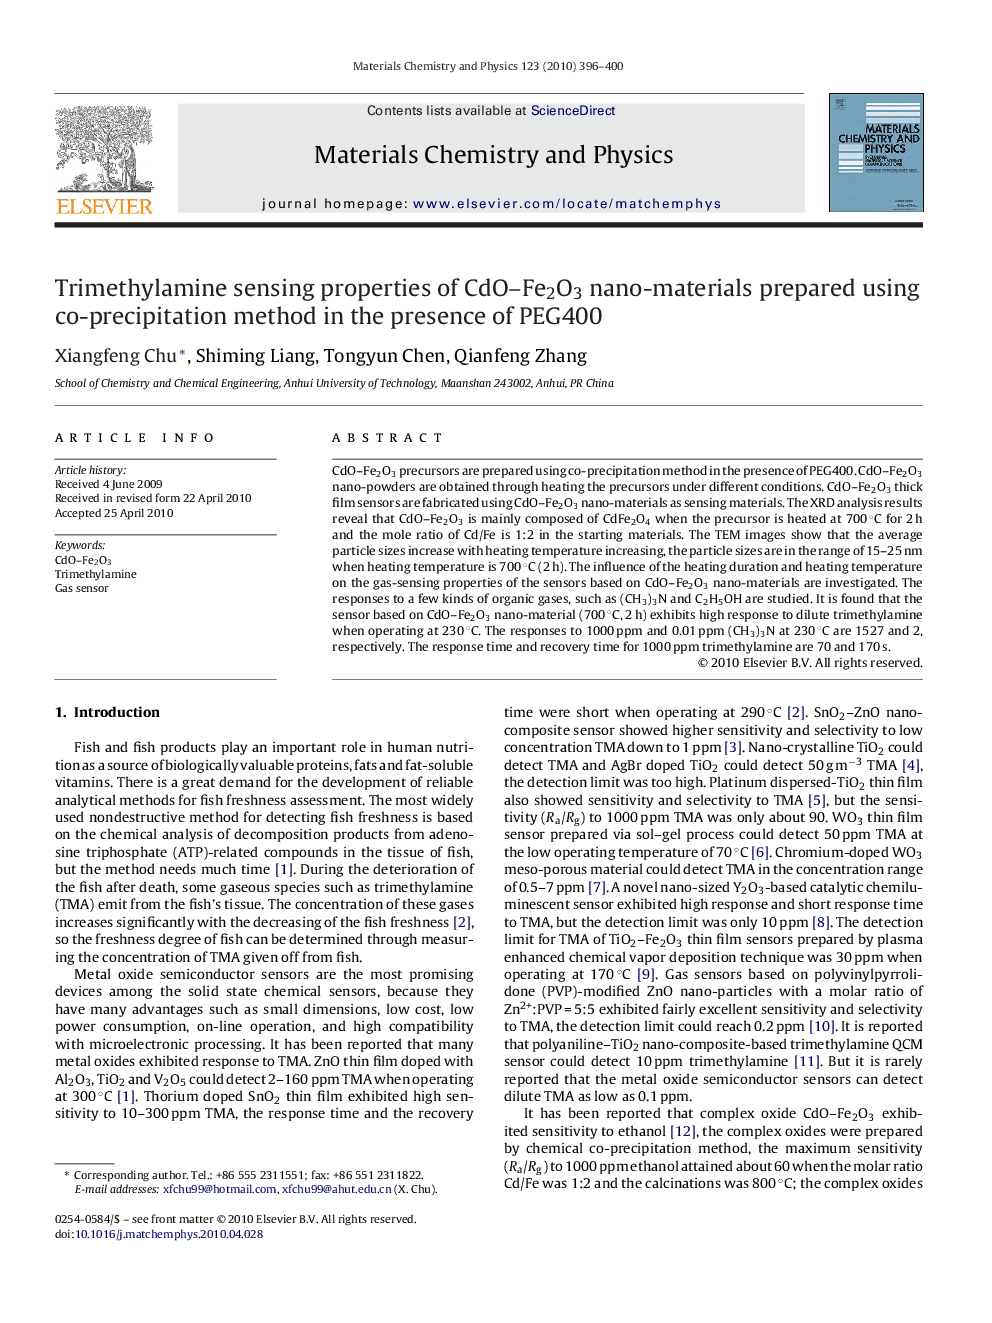 Trimethylamine sensing properties of CdO–Fe2O3 nano-materials prepared using co-precipitation method in the presence of PEG400